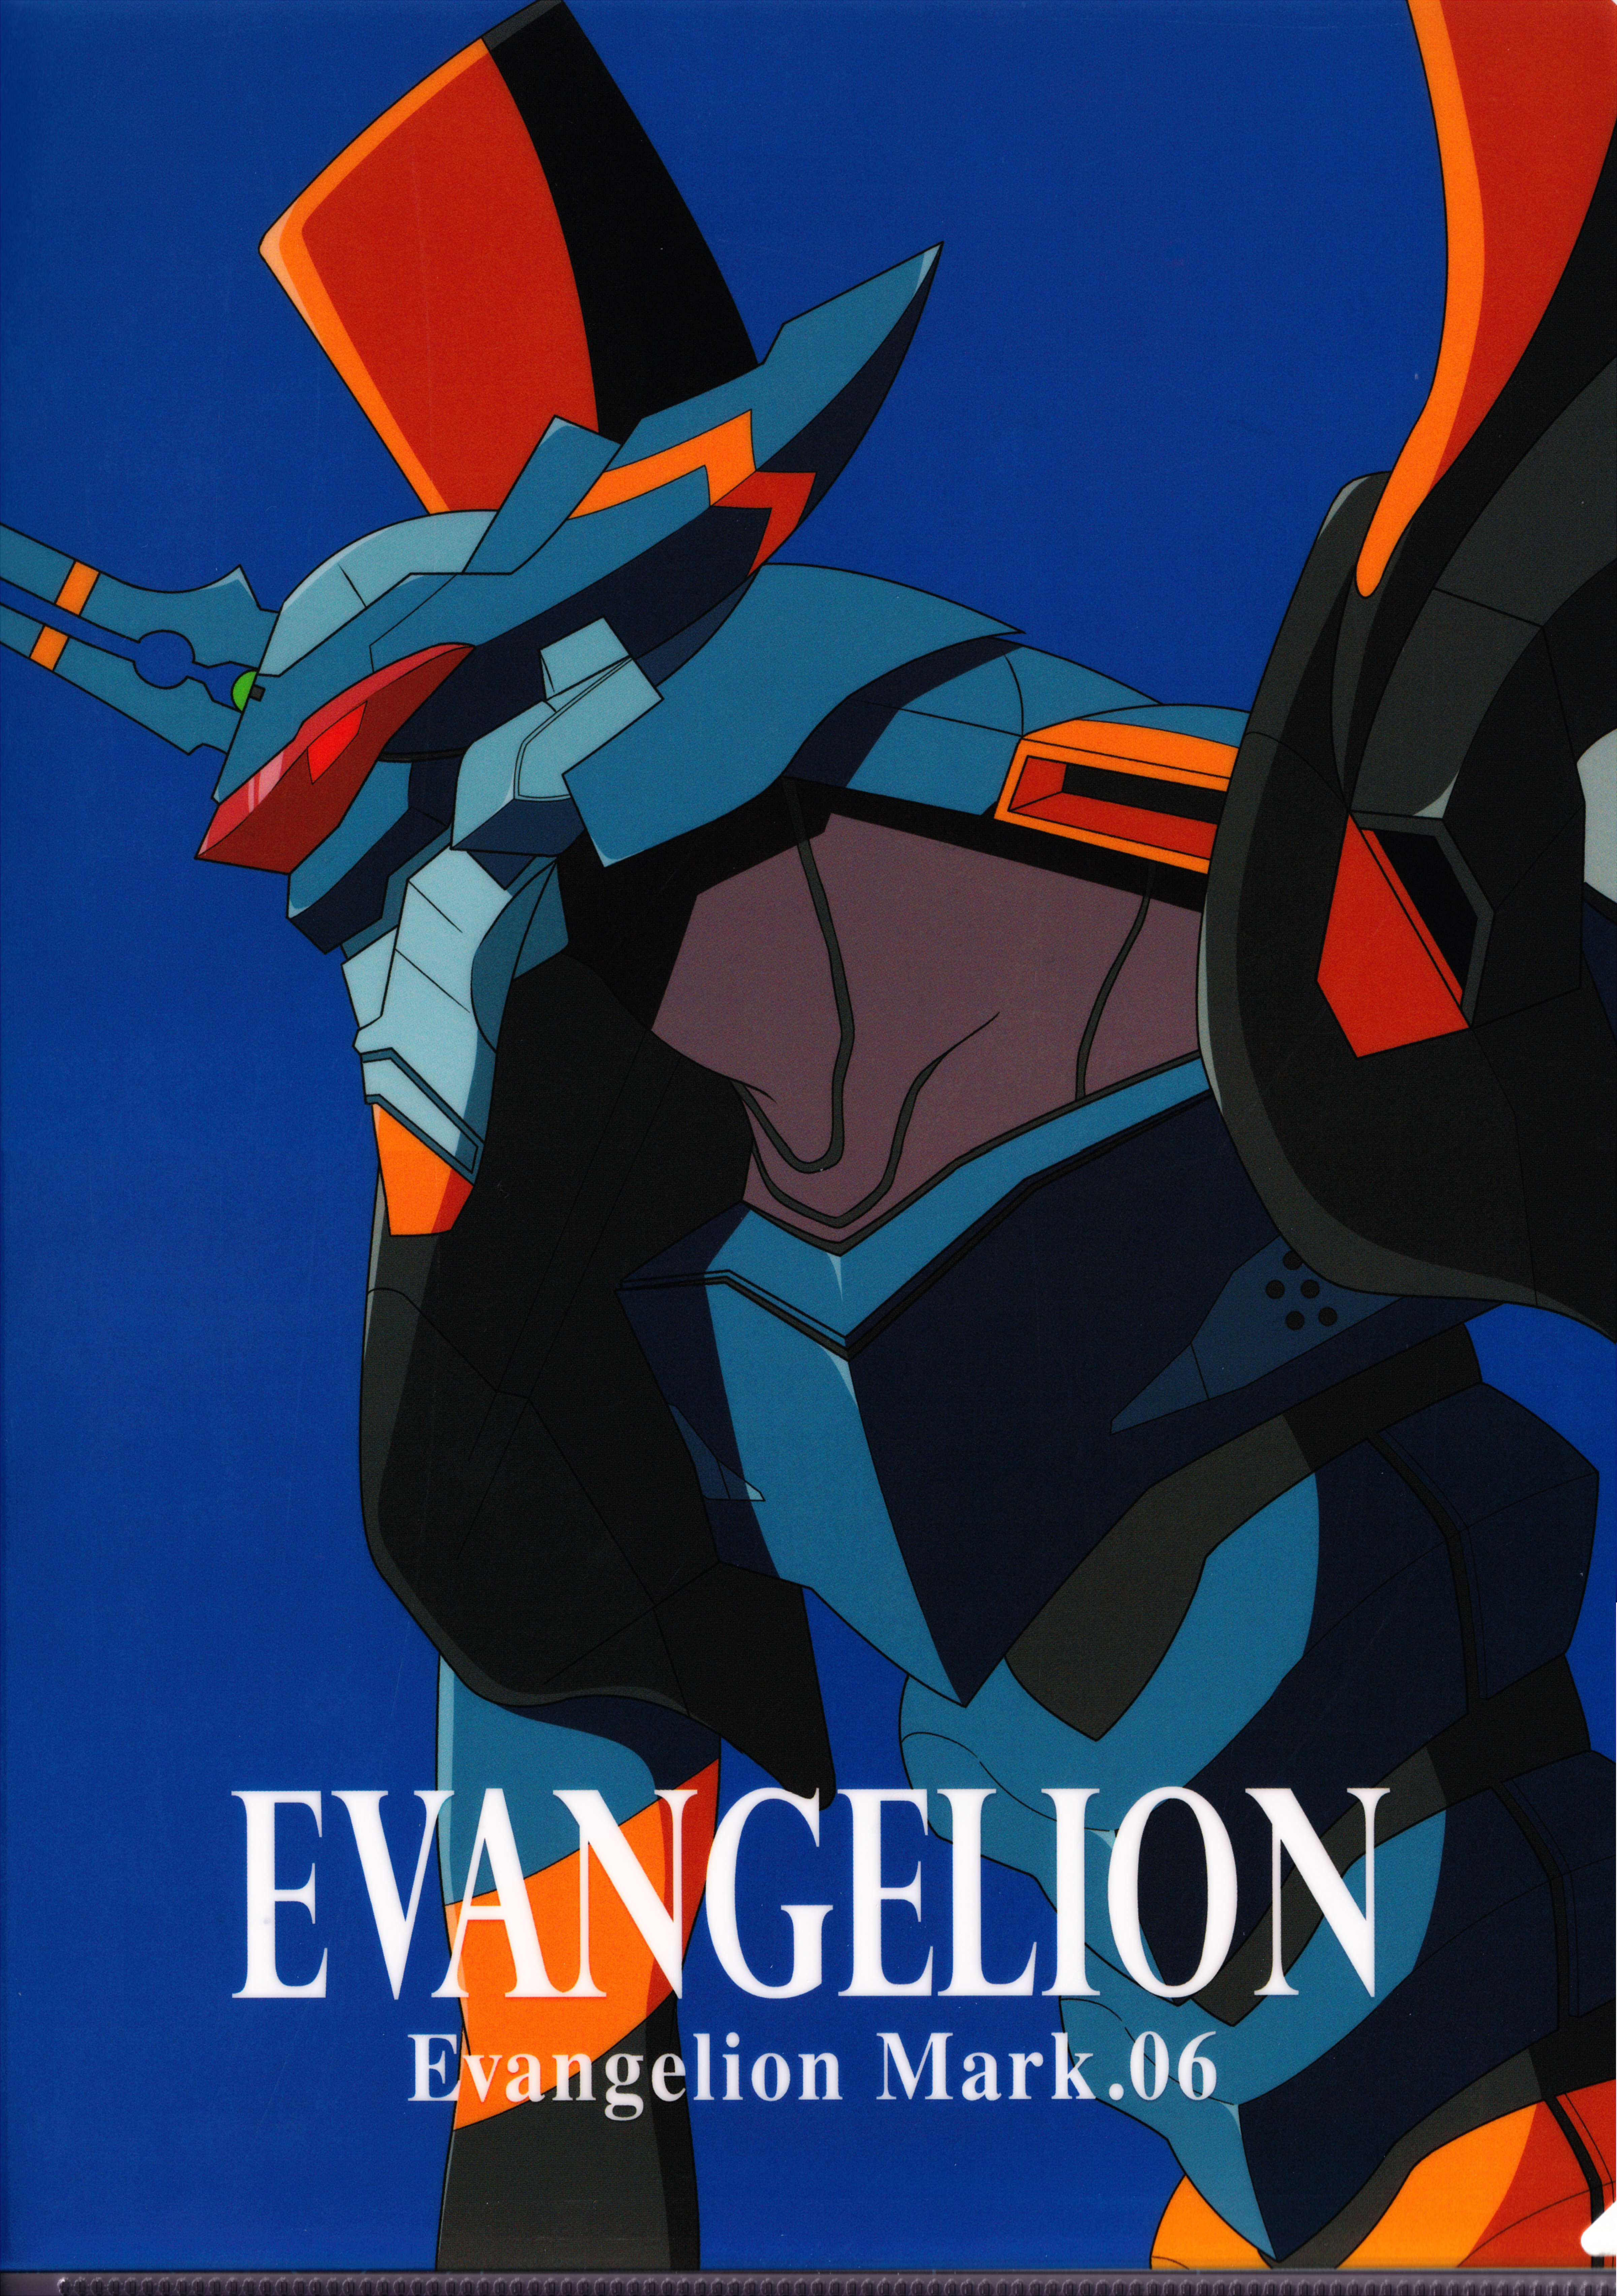 Mark.06 Genesis Evangelion Anime Image Board